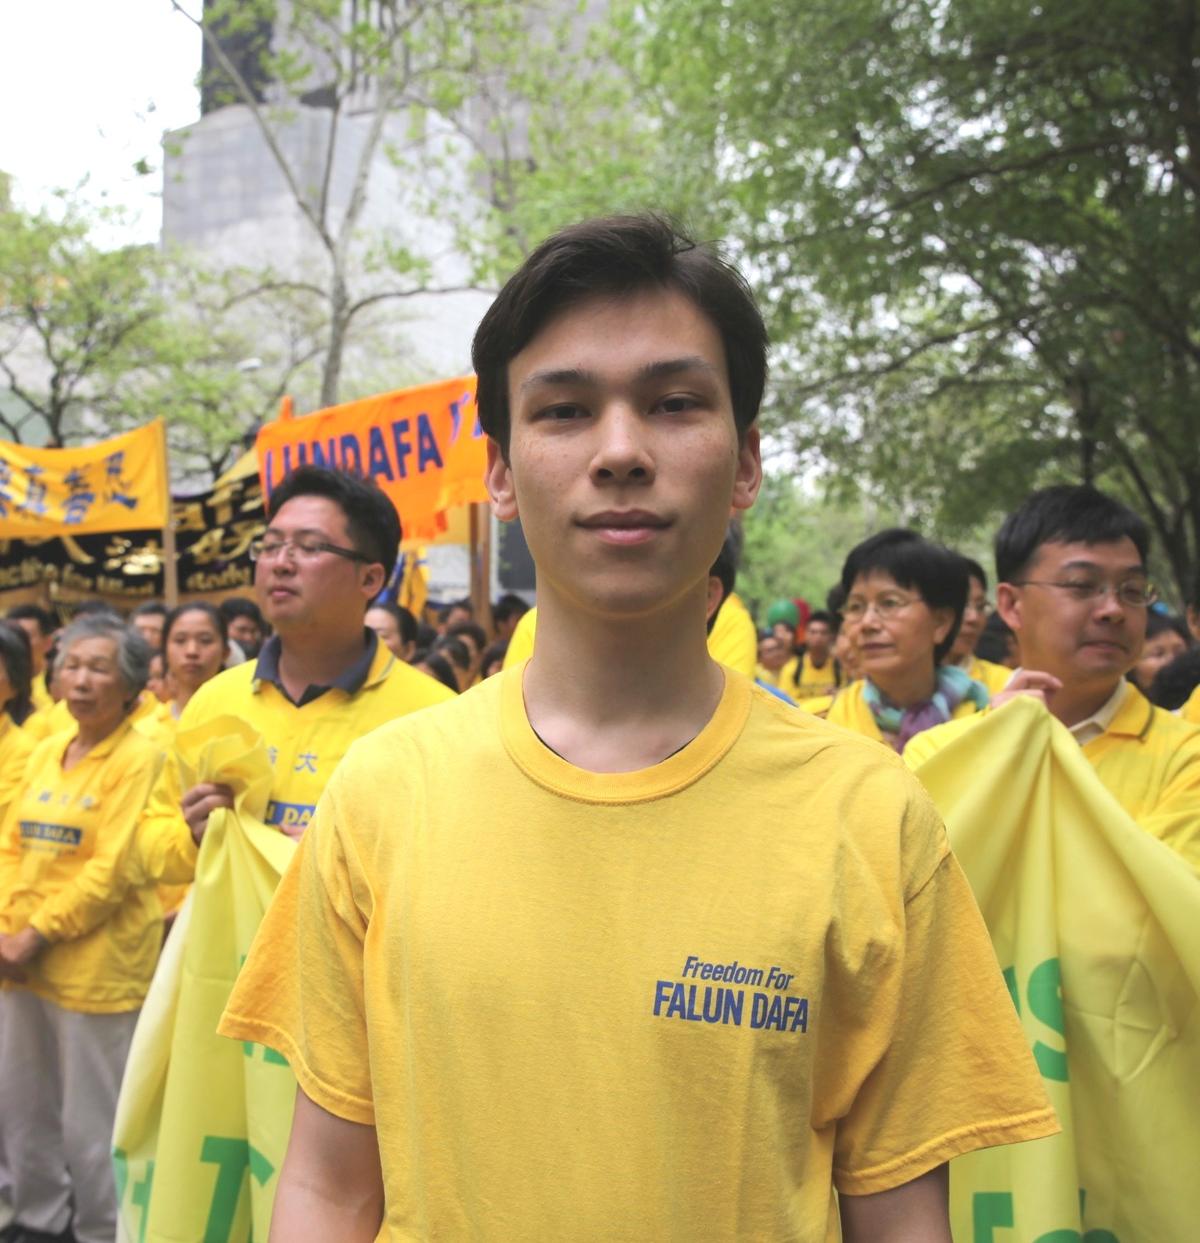 Hike Opfermann attending Falun Gong activities in New York City in 2016. (<a href="https://en.minghui.org/html/articles/2016/5/15/157018.html">Minghui.org</a>)